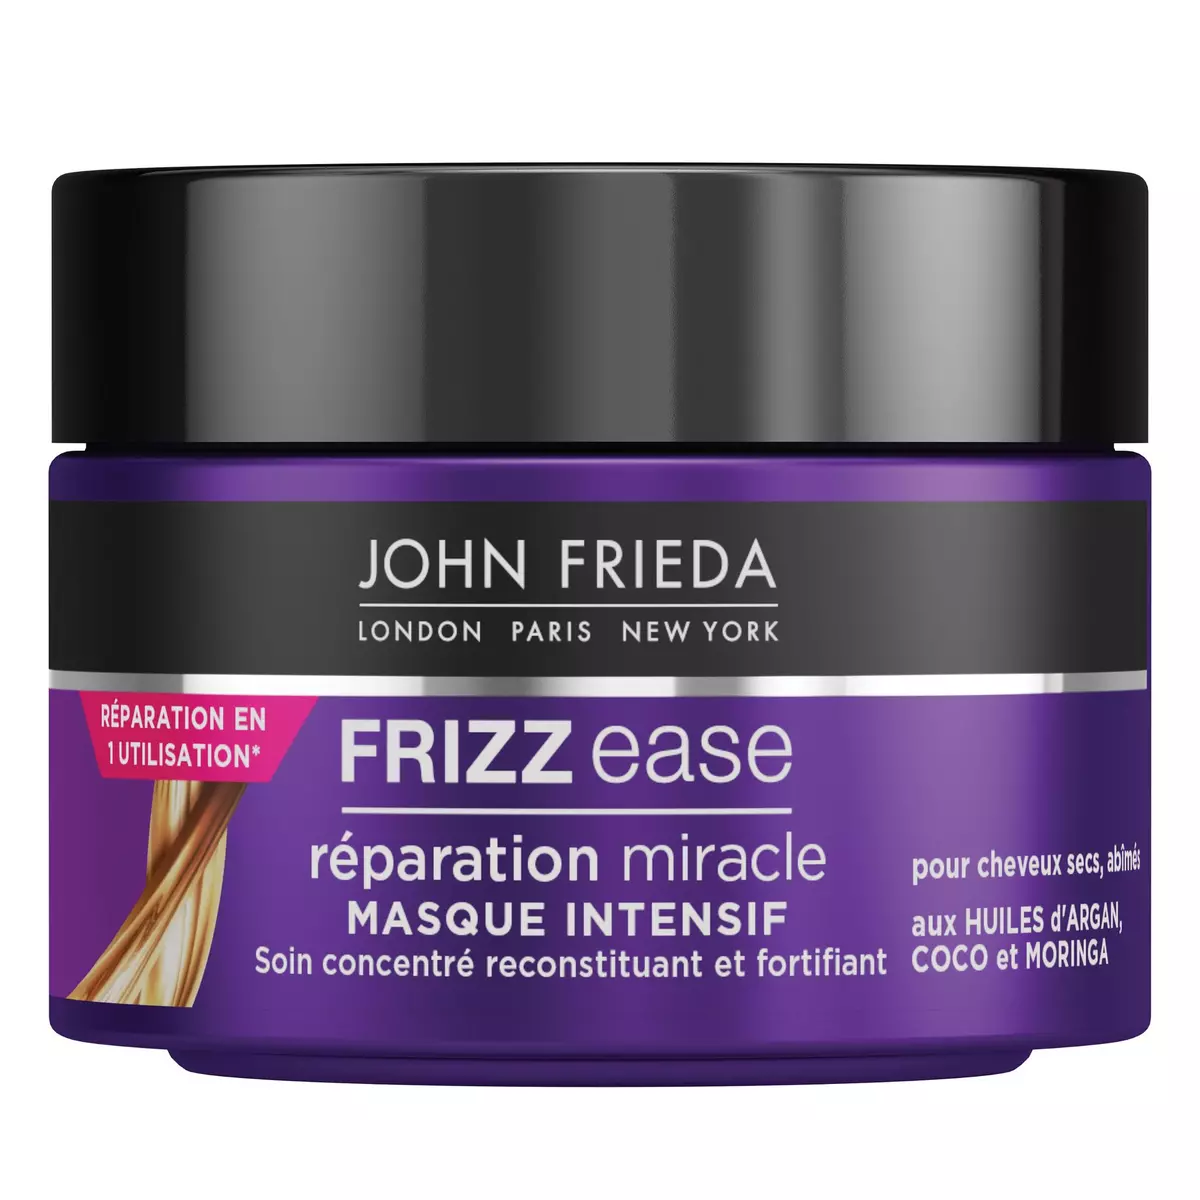 JOHN FRIEDA Frizz ease réparation miracle masque intensif 250ml